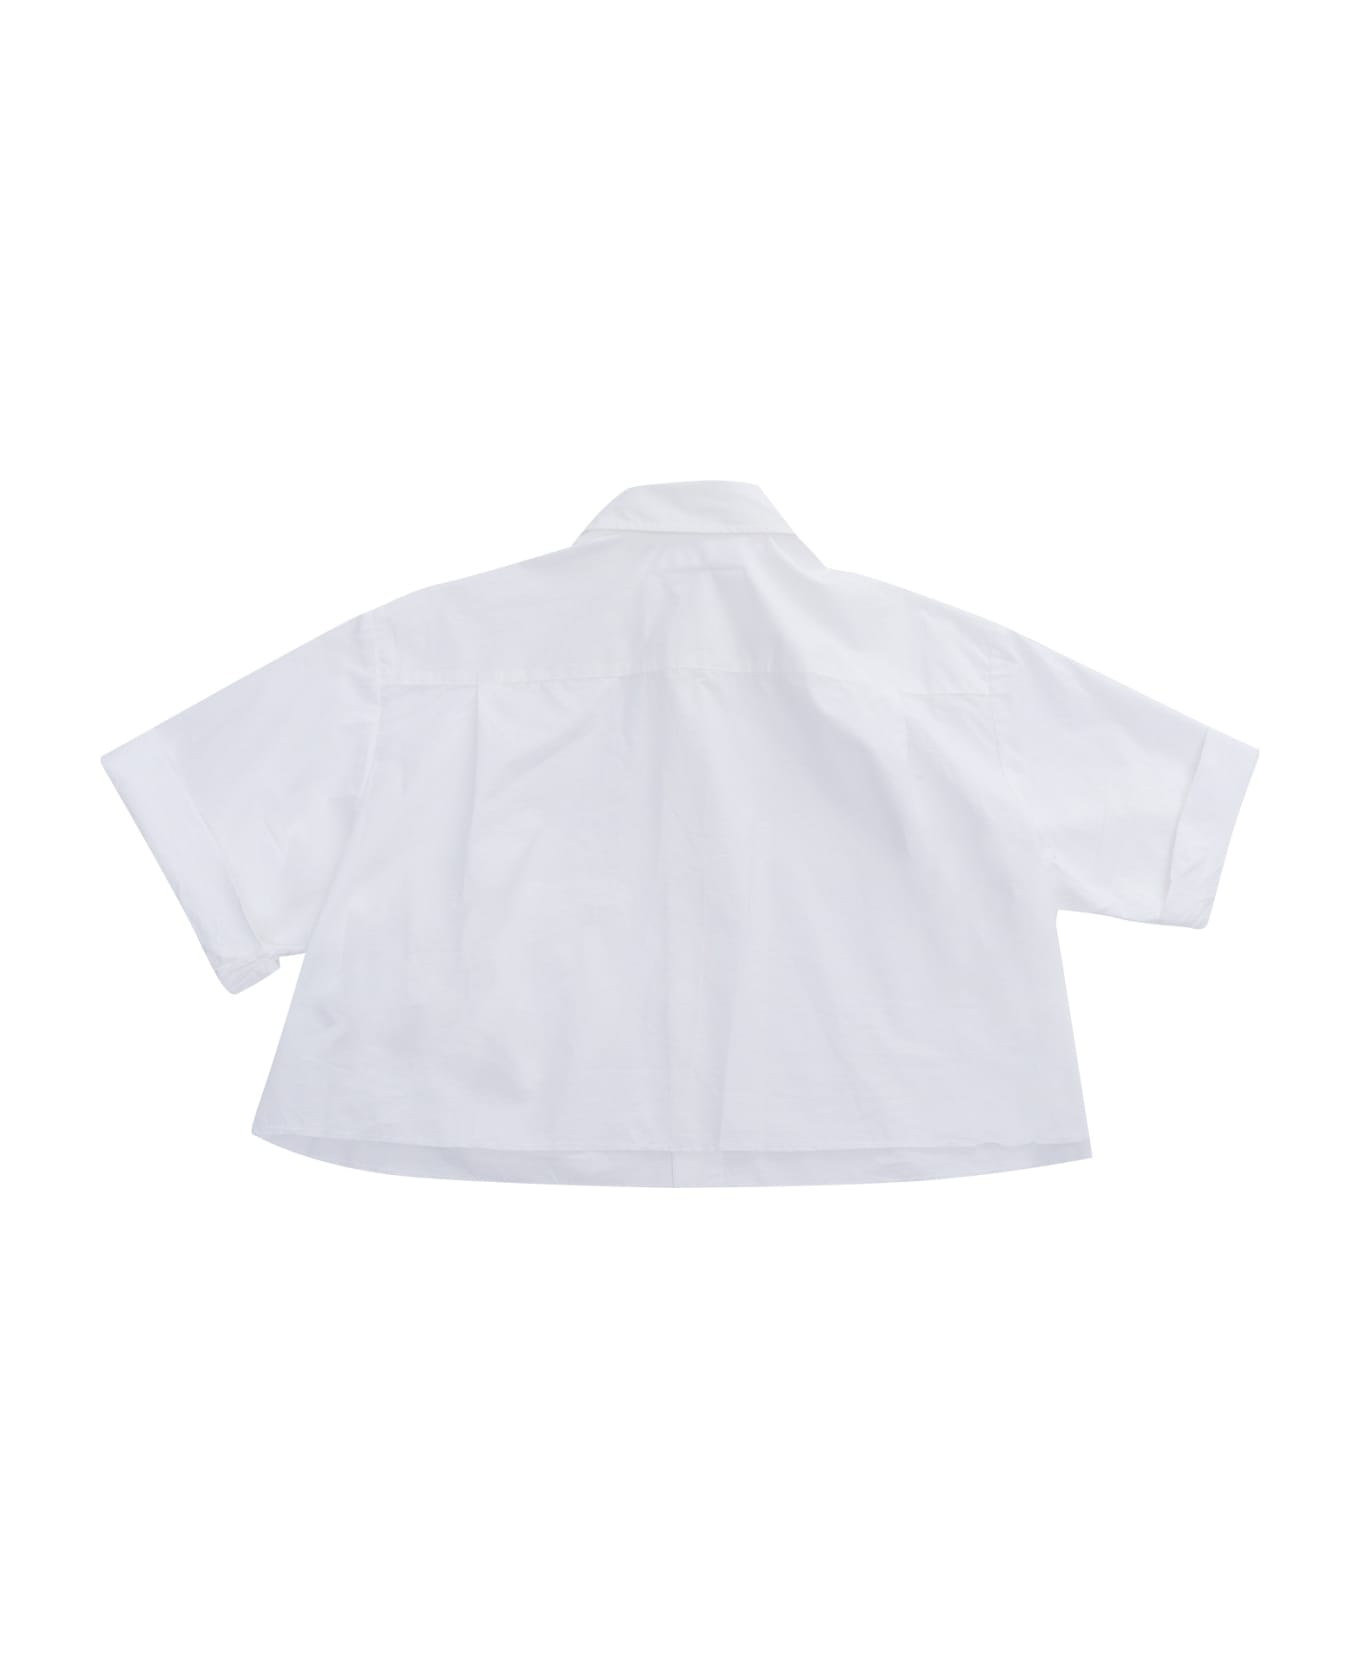 MM6 Maison Margiela White Cropped T-shirt - WHITE